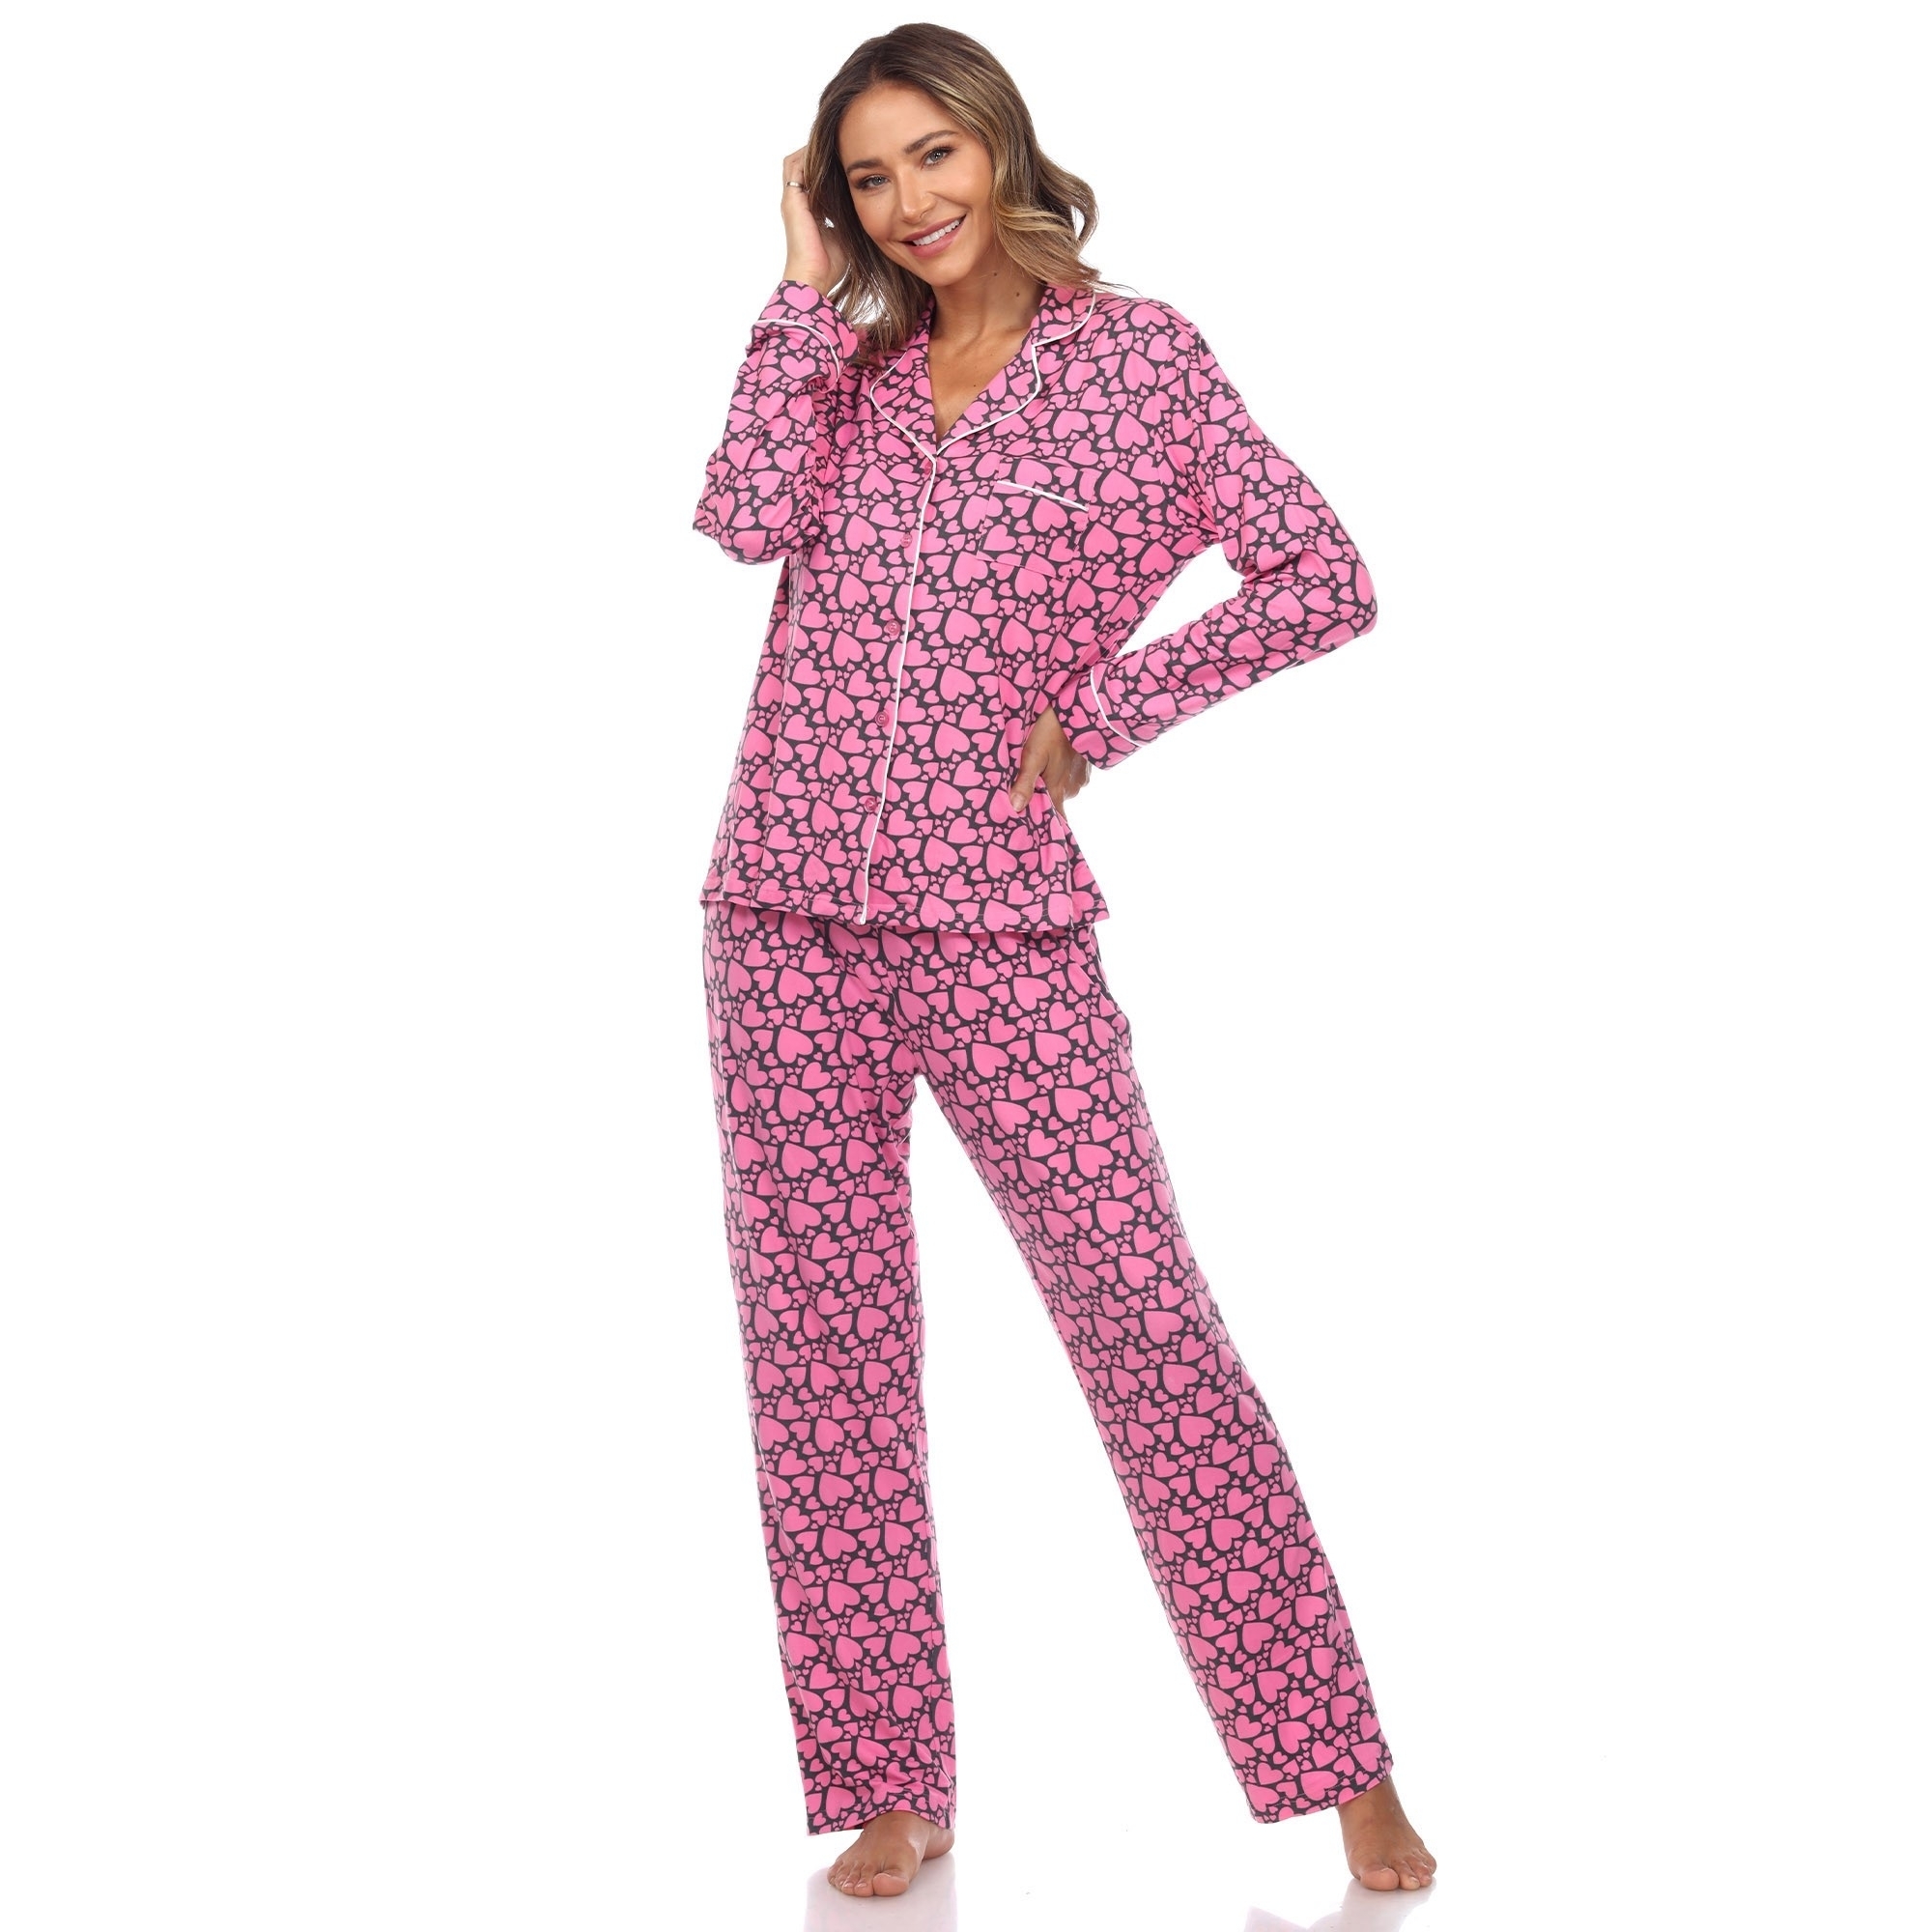 White Mark Women's Long Sleeve Hearts Pajama Set - Pink, Medium